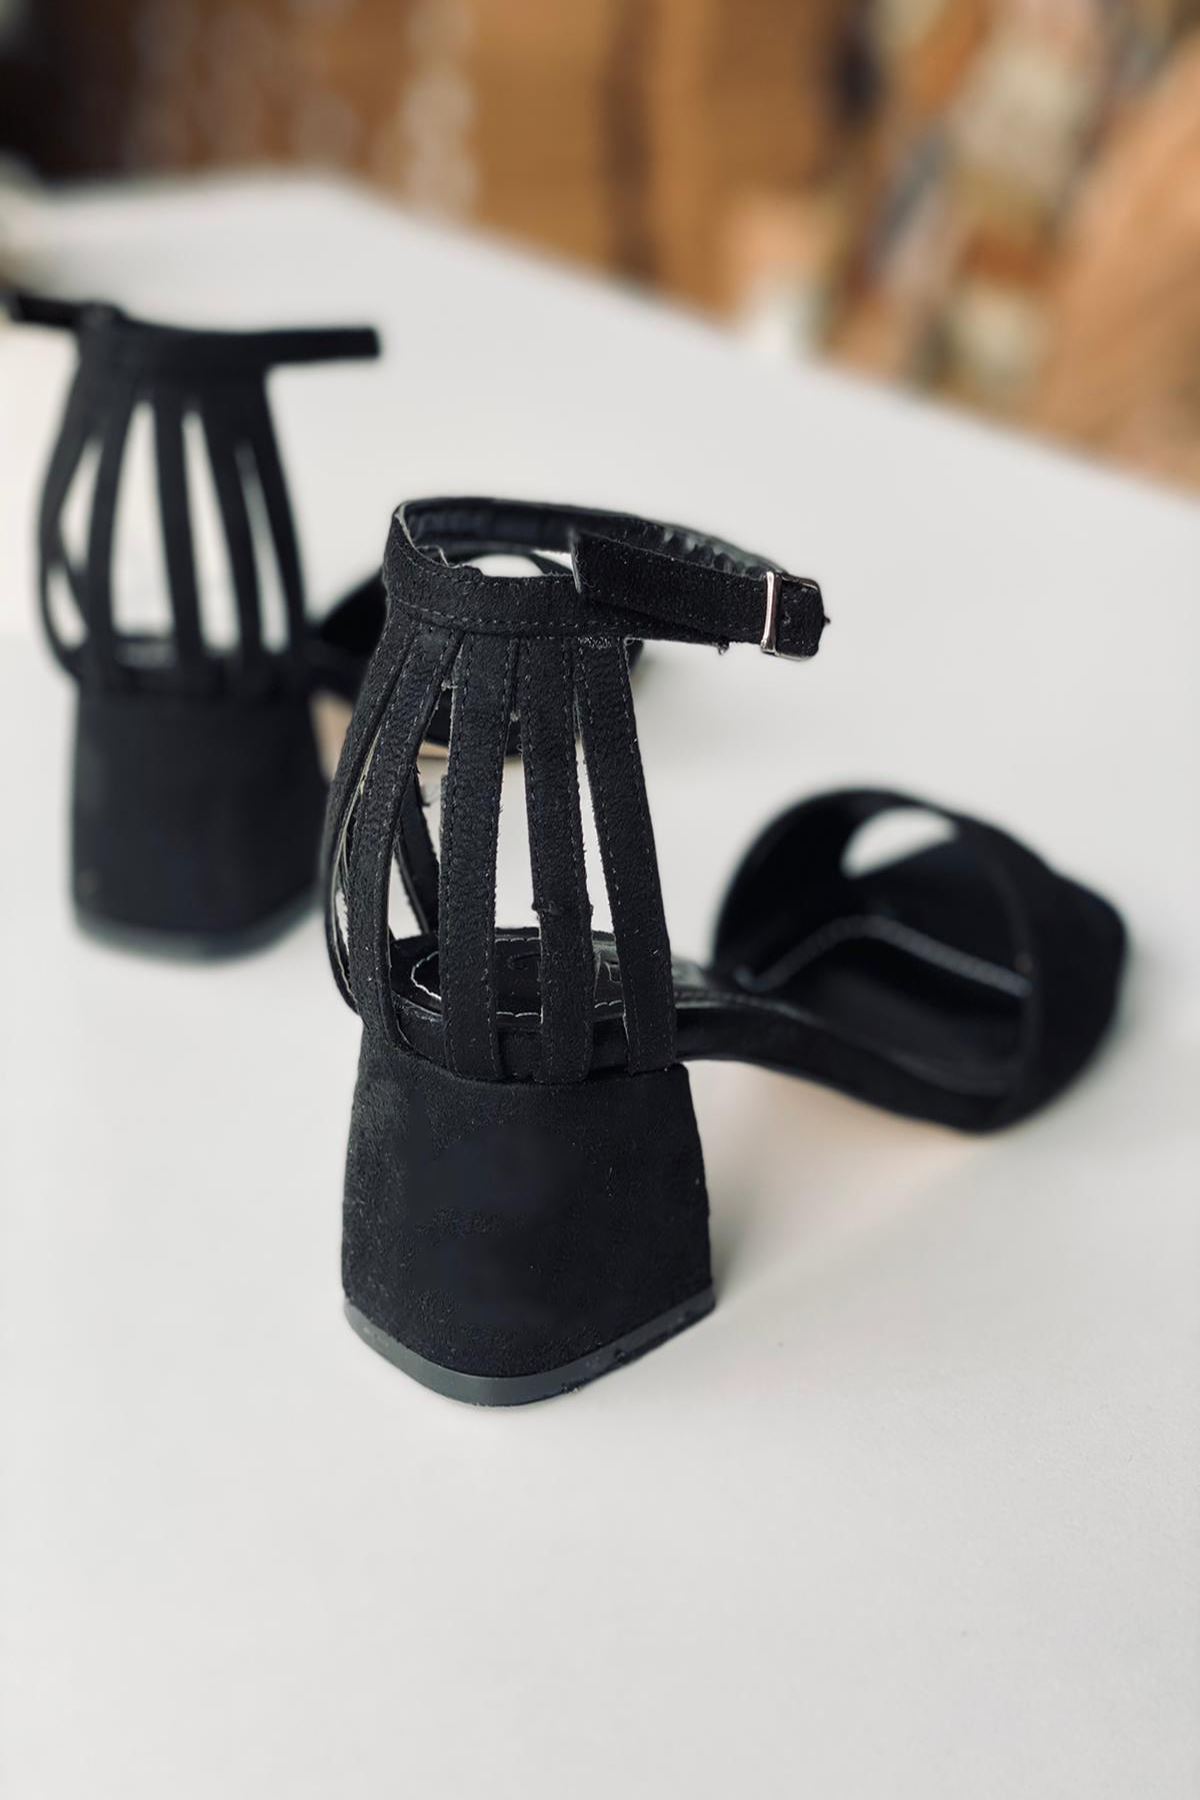 Mida Shoes Y901 Siyah Süet Topuklu Ayakkabı